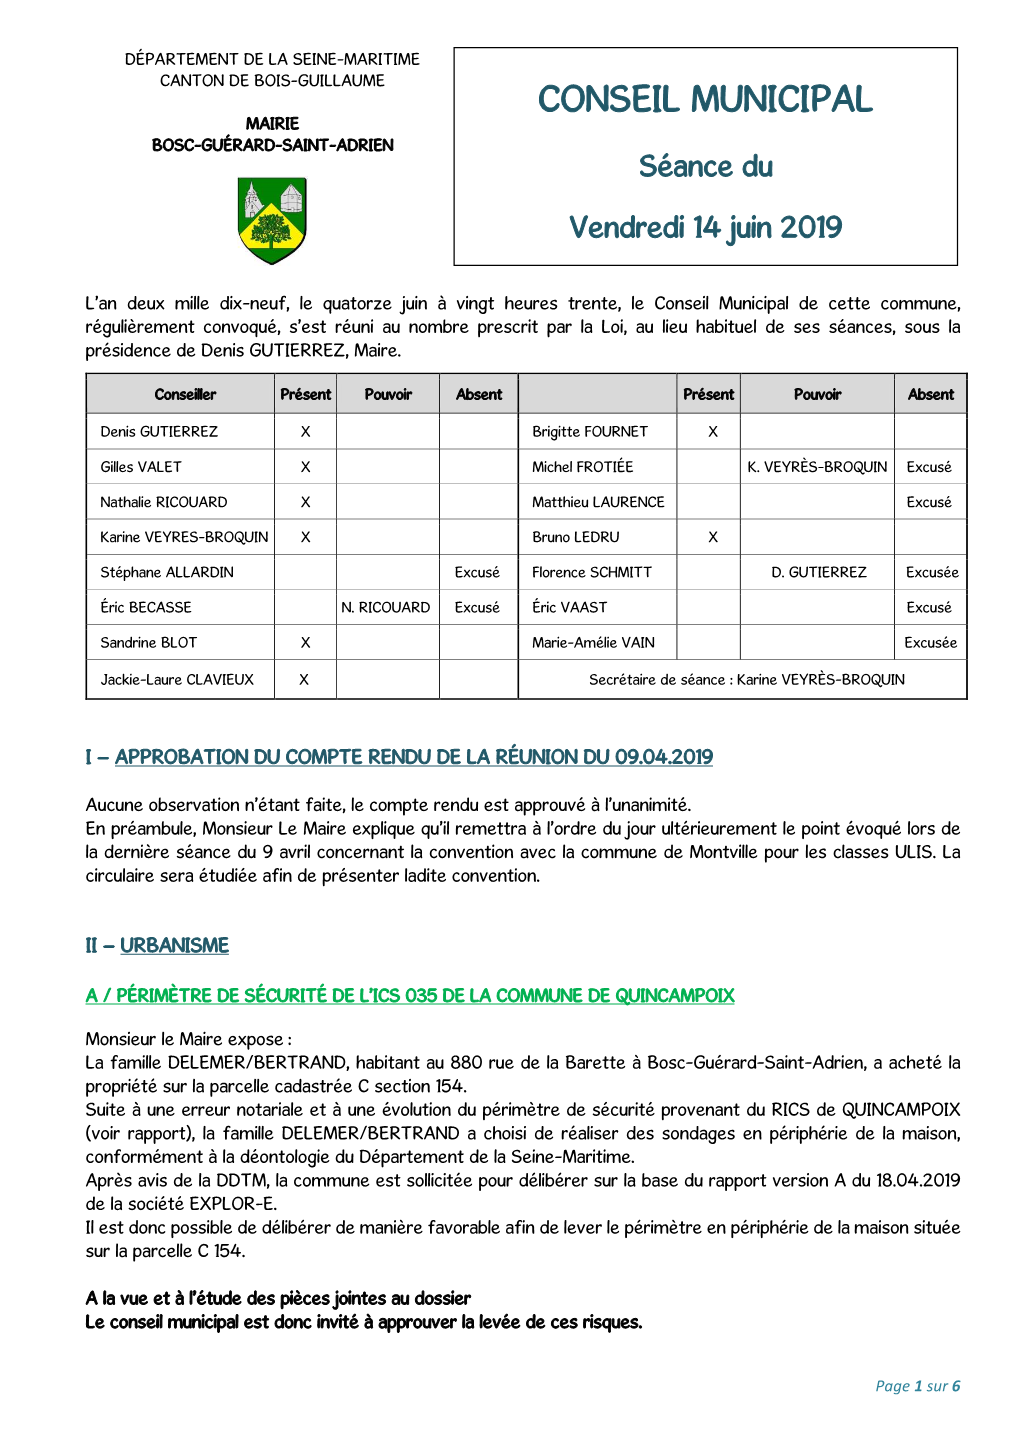 CONSEIL MUNICIPAL MAIRIE BOSC -GUÉRARD -SAINT -ADRIEN Séance Du Vendredi 14 Juin 2019